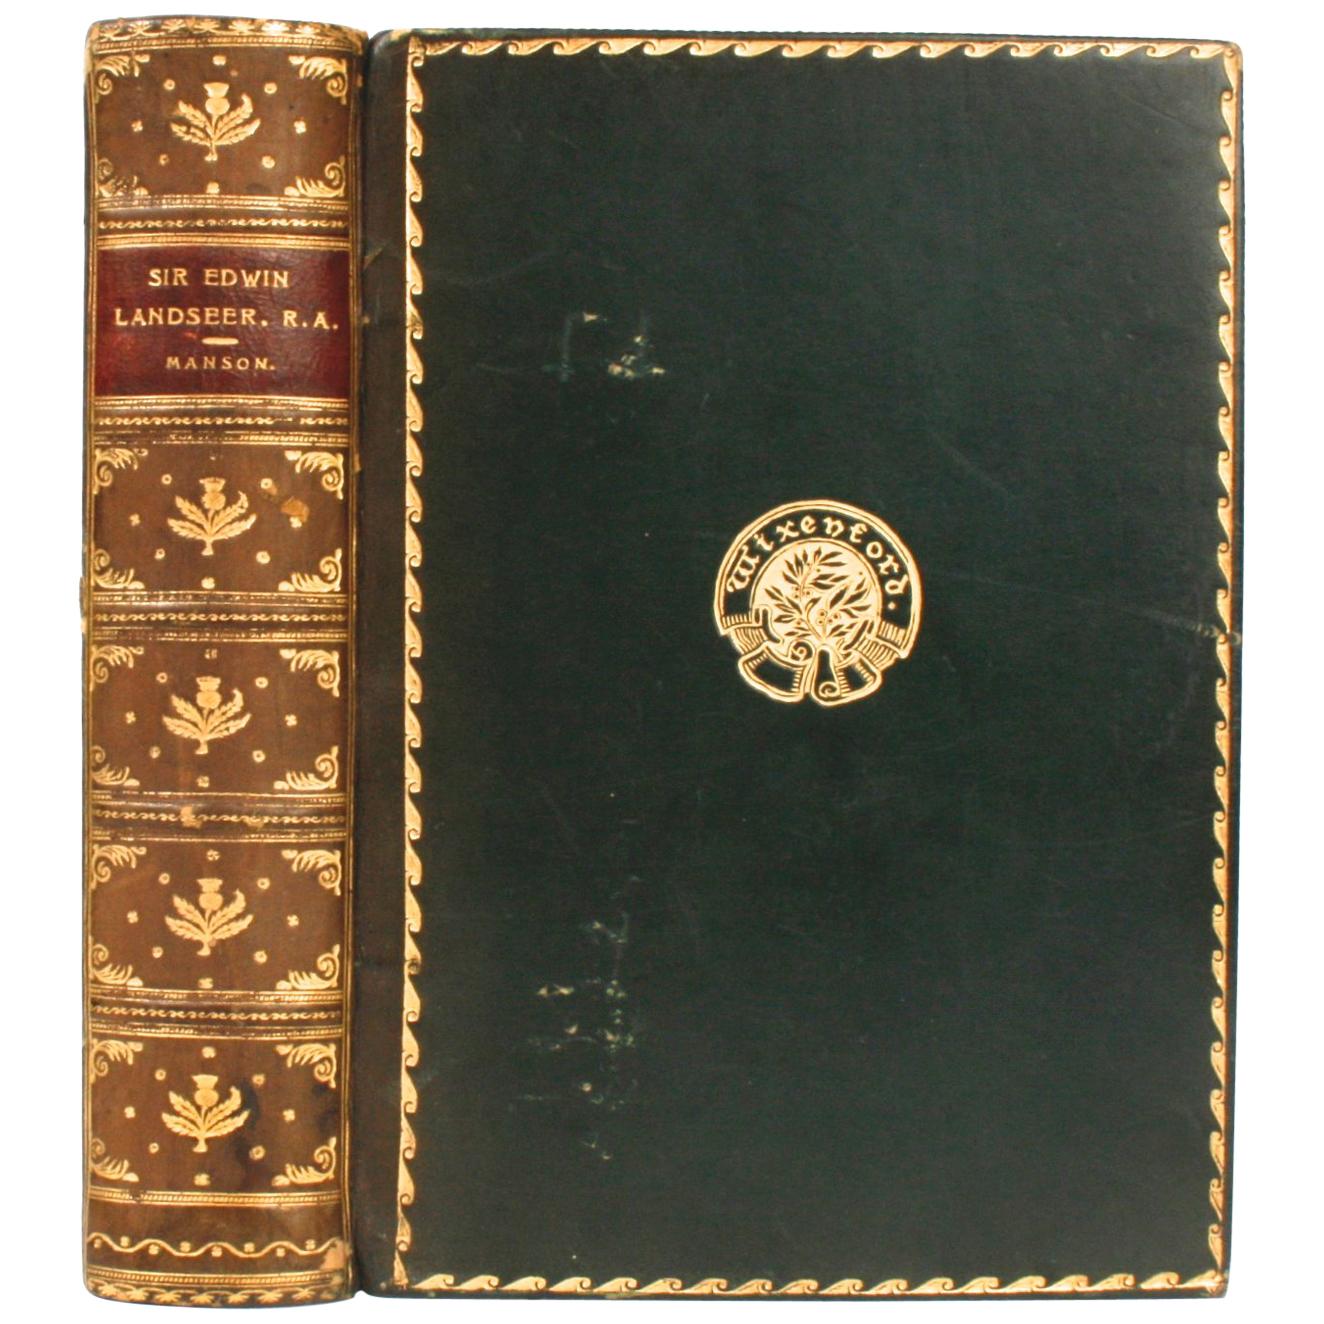 Sir Edwin Landseer R.a. by James a. Manson, 1st Edition, 1902